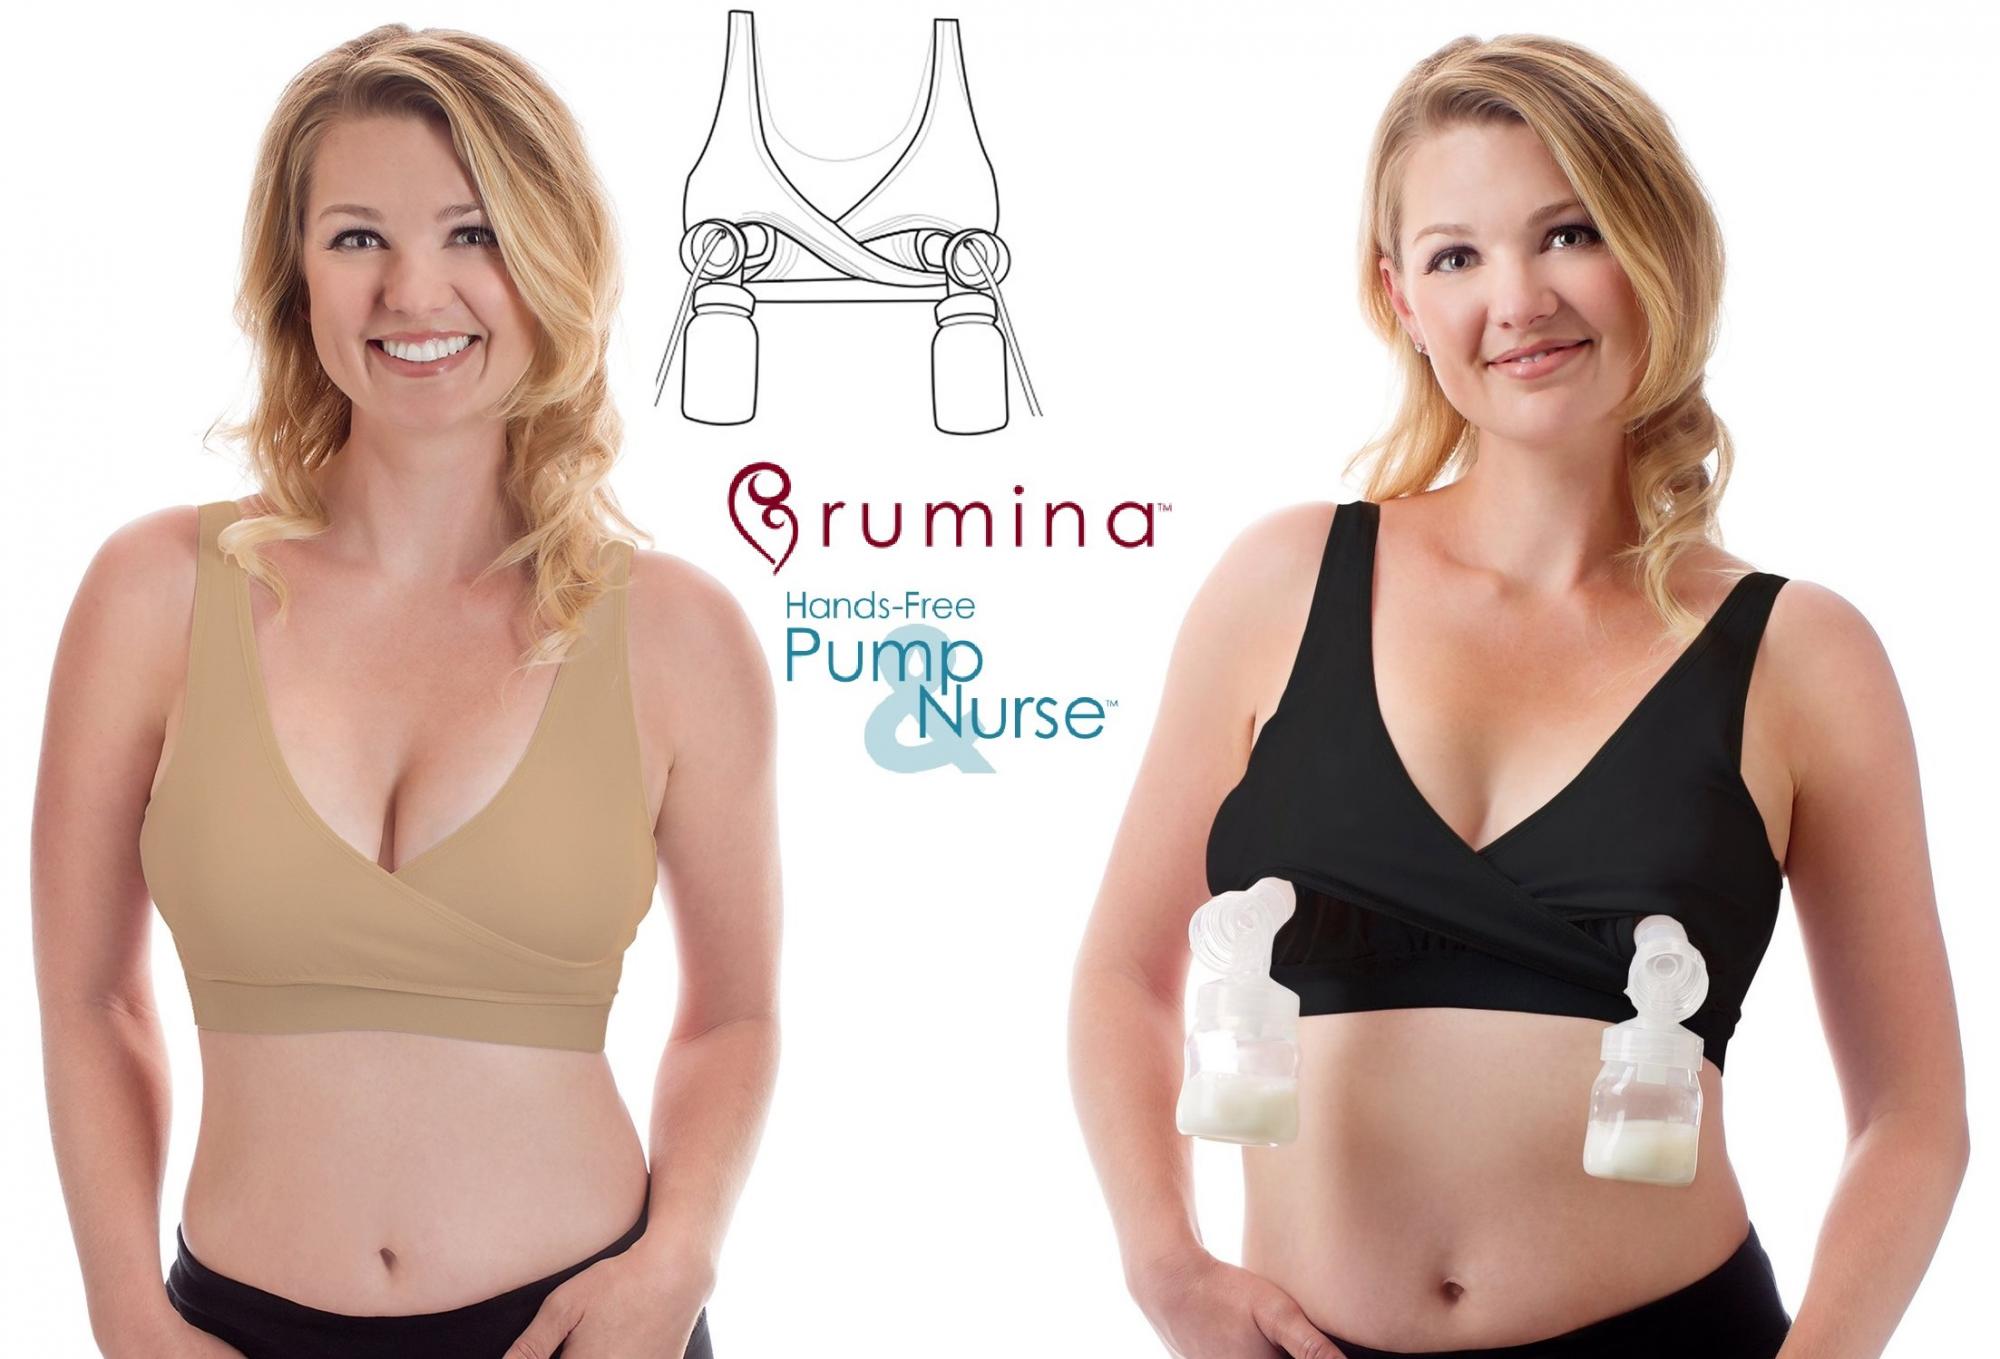 Rumina Classic Hands-Free Pumping & Nursing Bra - X-Large Only